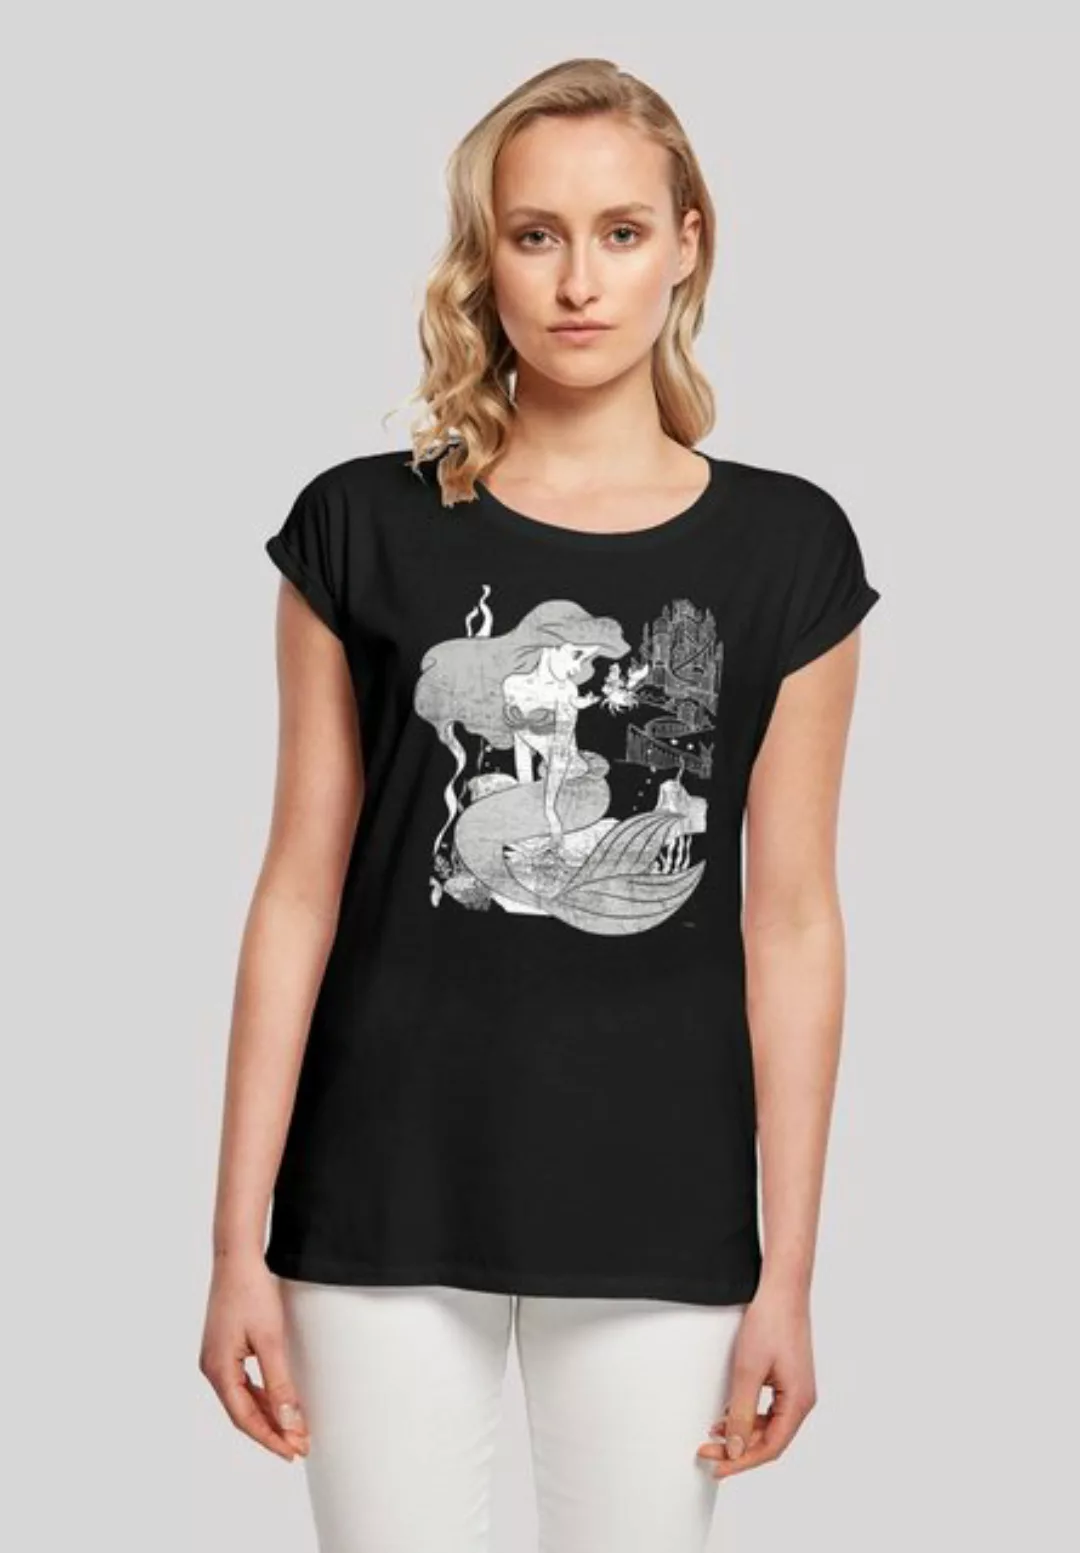 F4NT4STIC T-Shirt "Disney Arielle die Meerjungfrau", Print günstig online kaufen